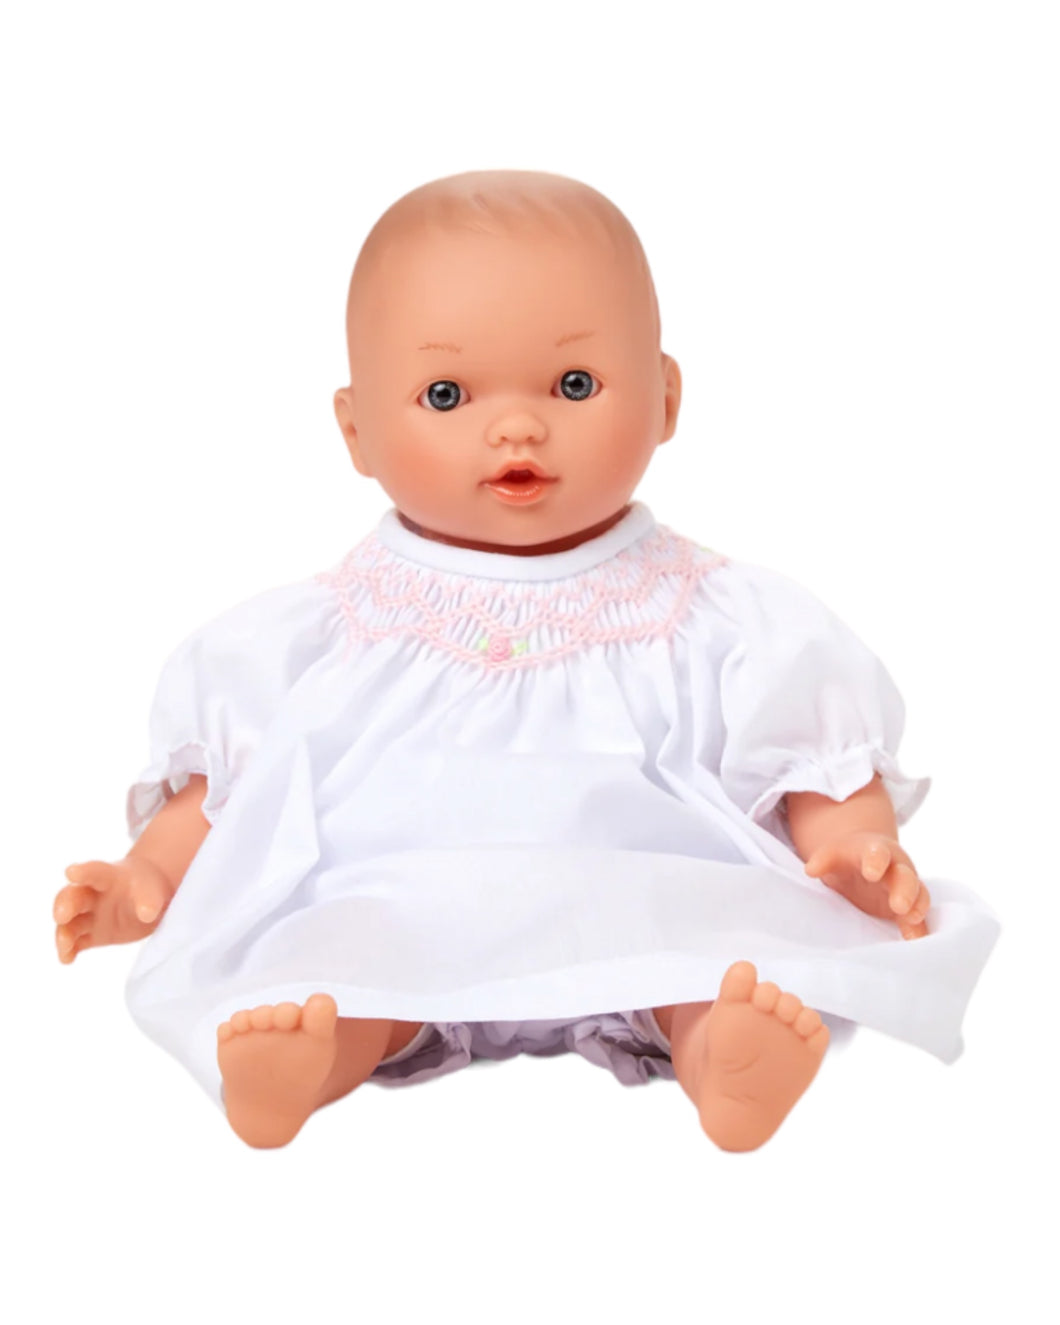 Baby Doll in Monogrammed White Dress